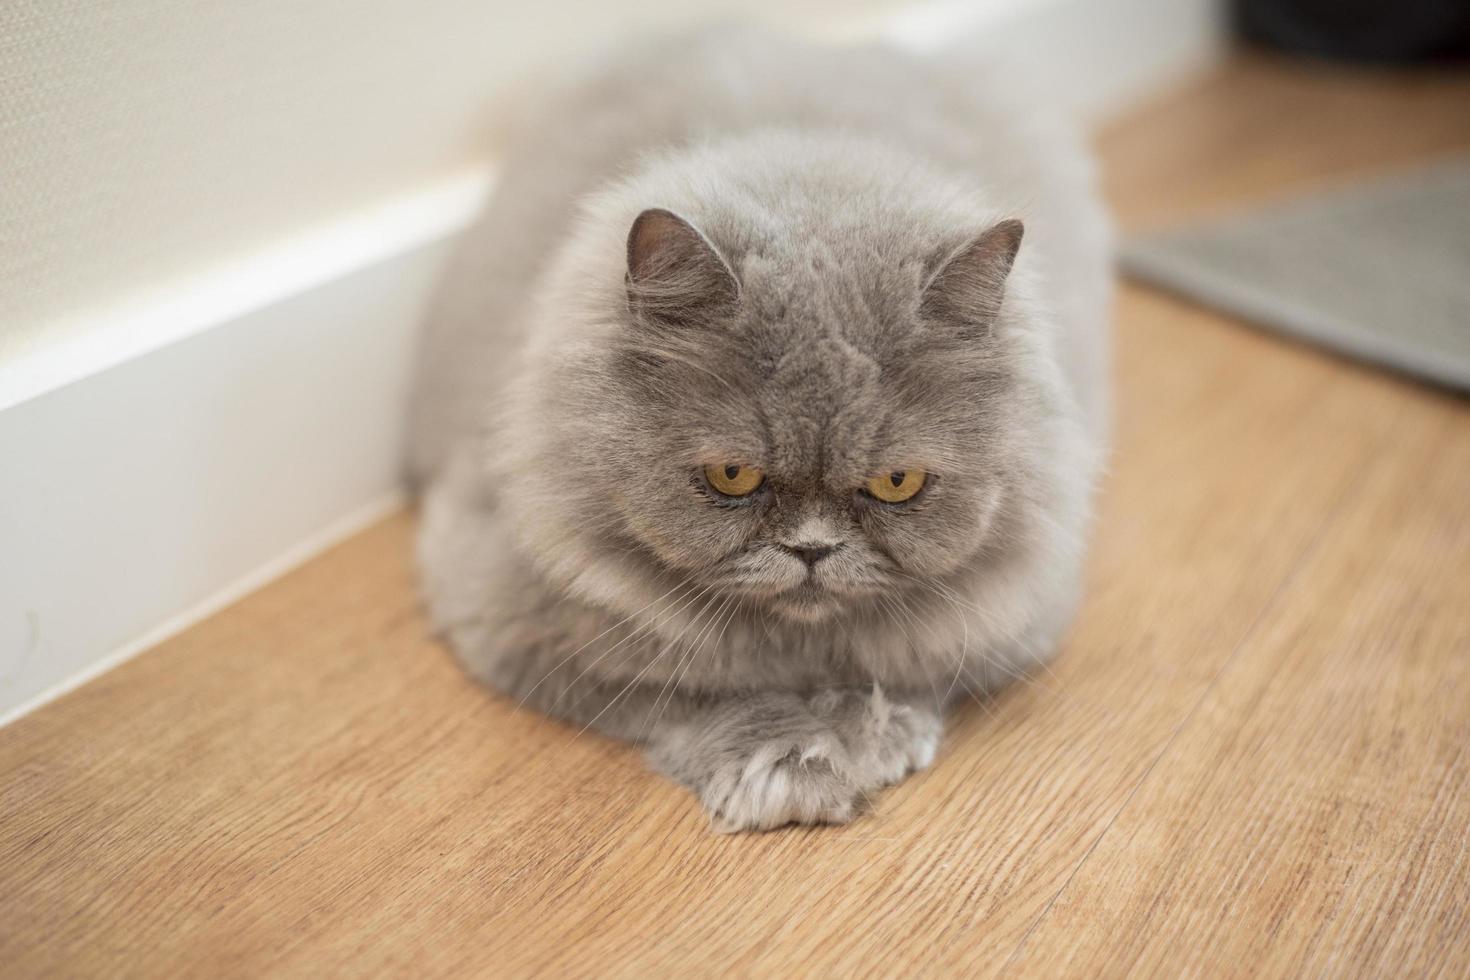 Cute Scottish fold cat. photo